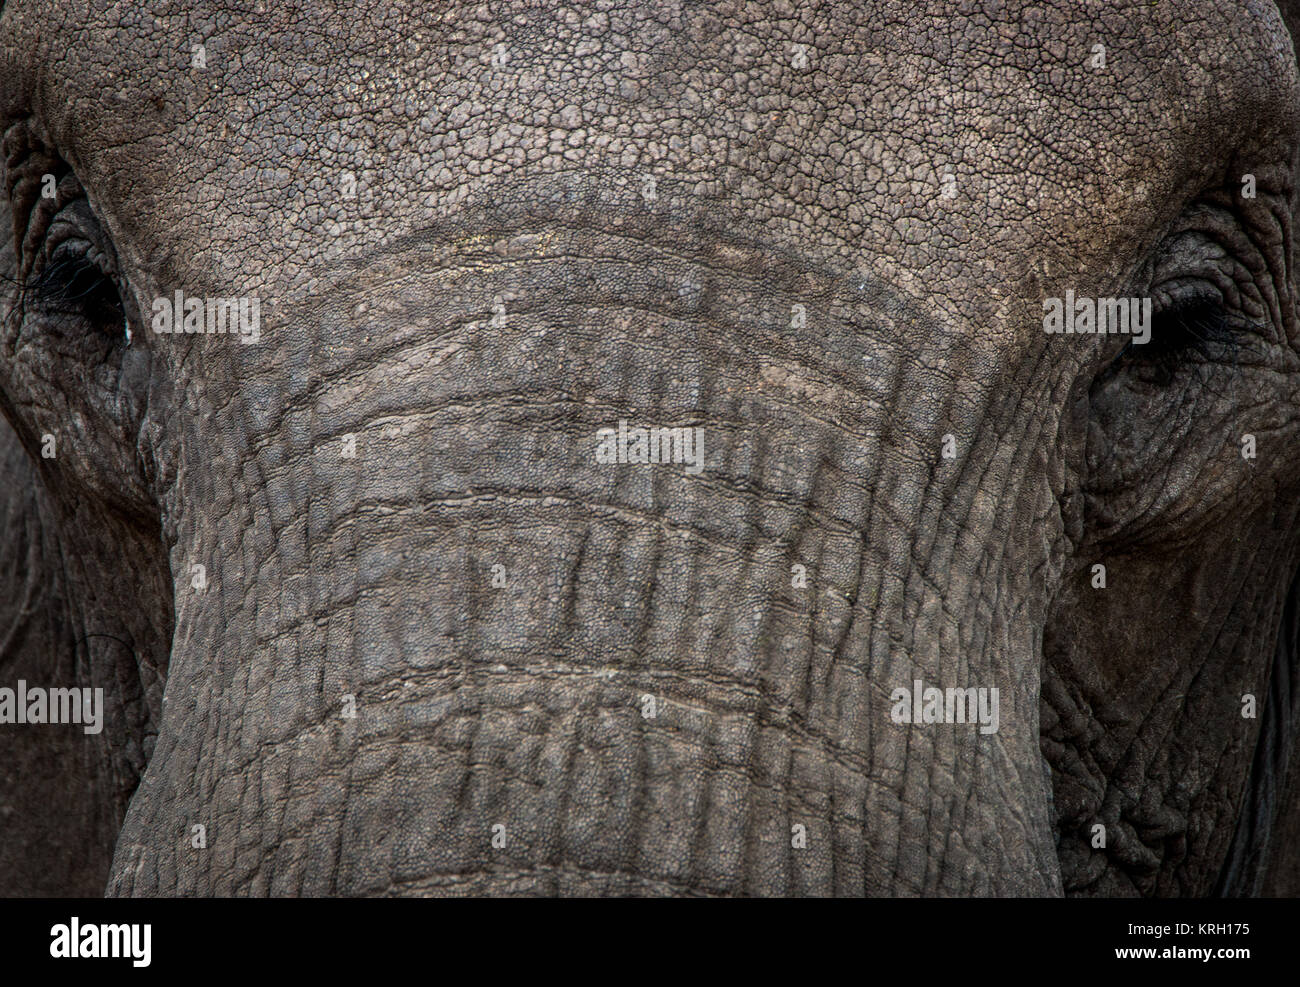 A Close up of Elephant eyes. Stock Photo